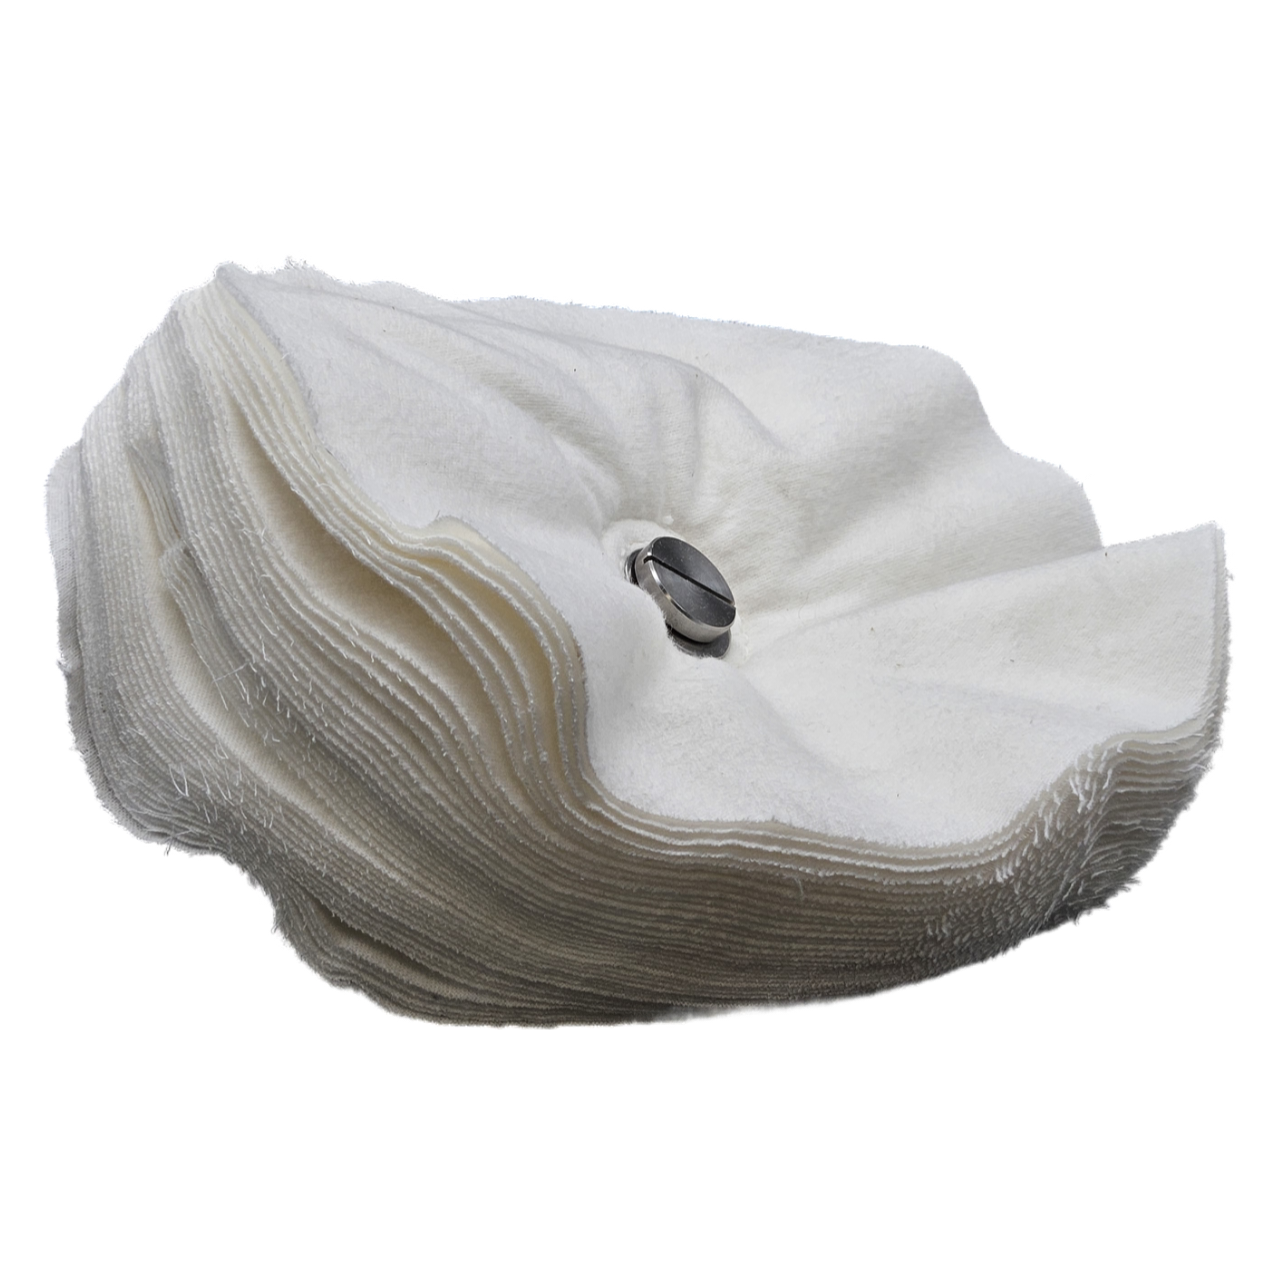 2) Cotton Terry Applicator Pad – SummerShine Supply